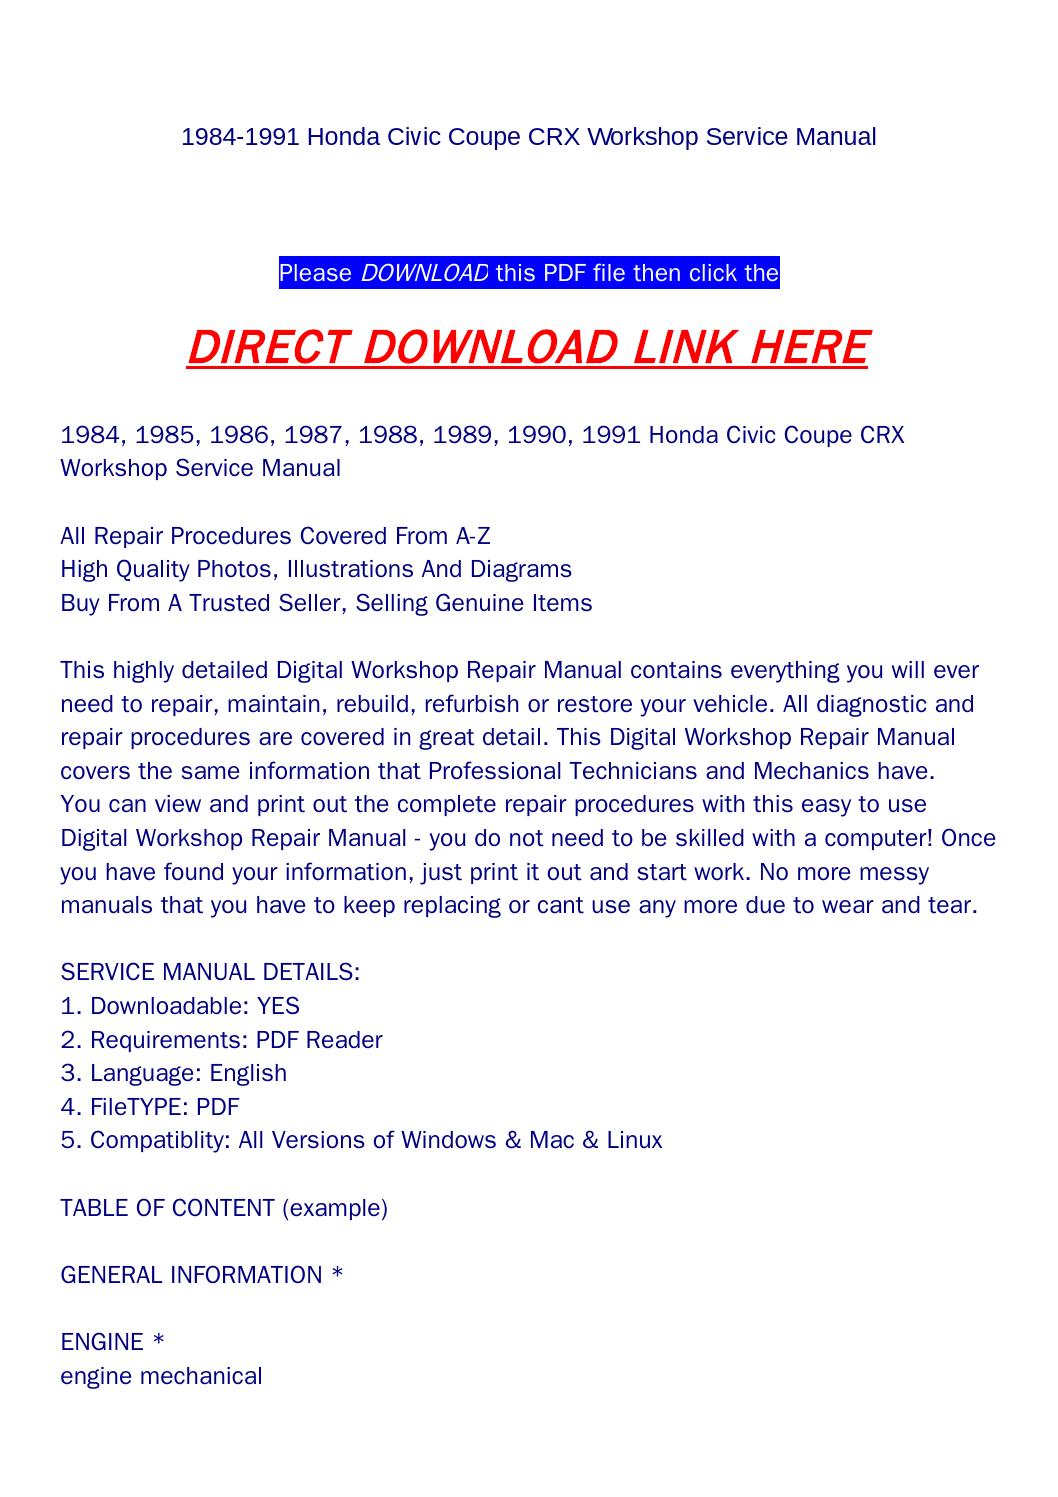 civic crx 1986 service manual pdf